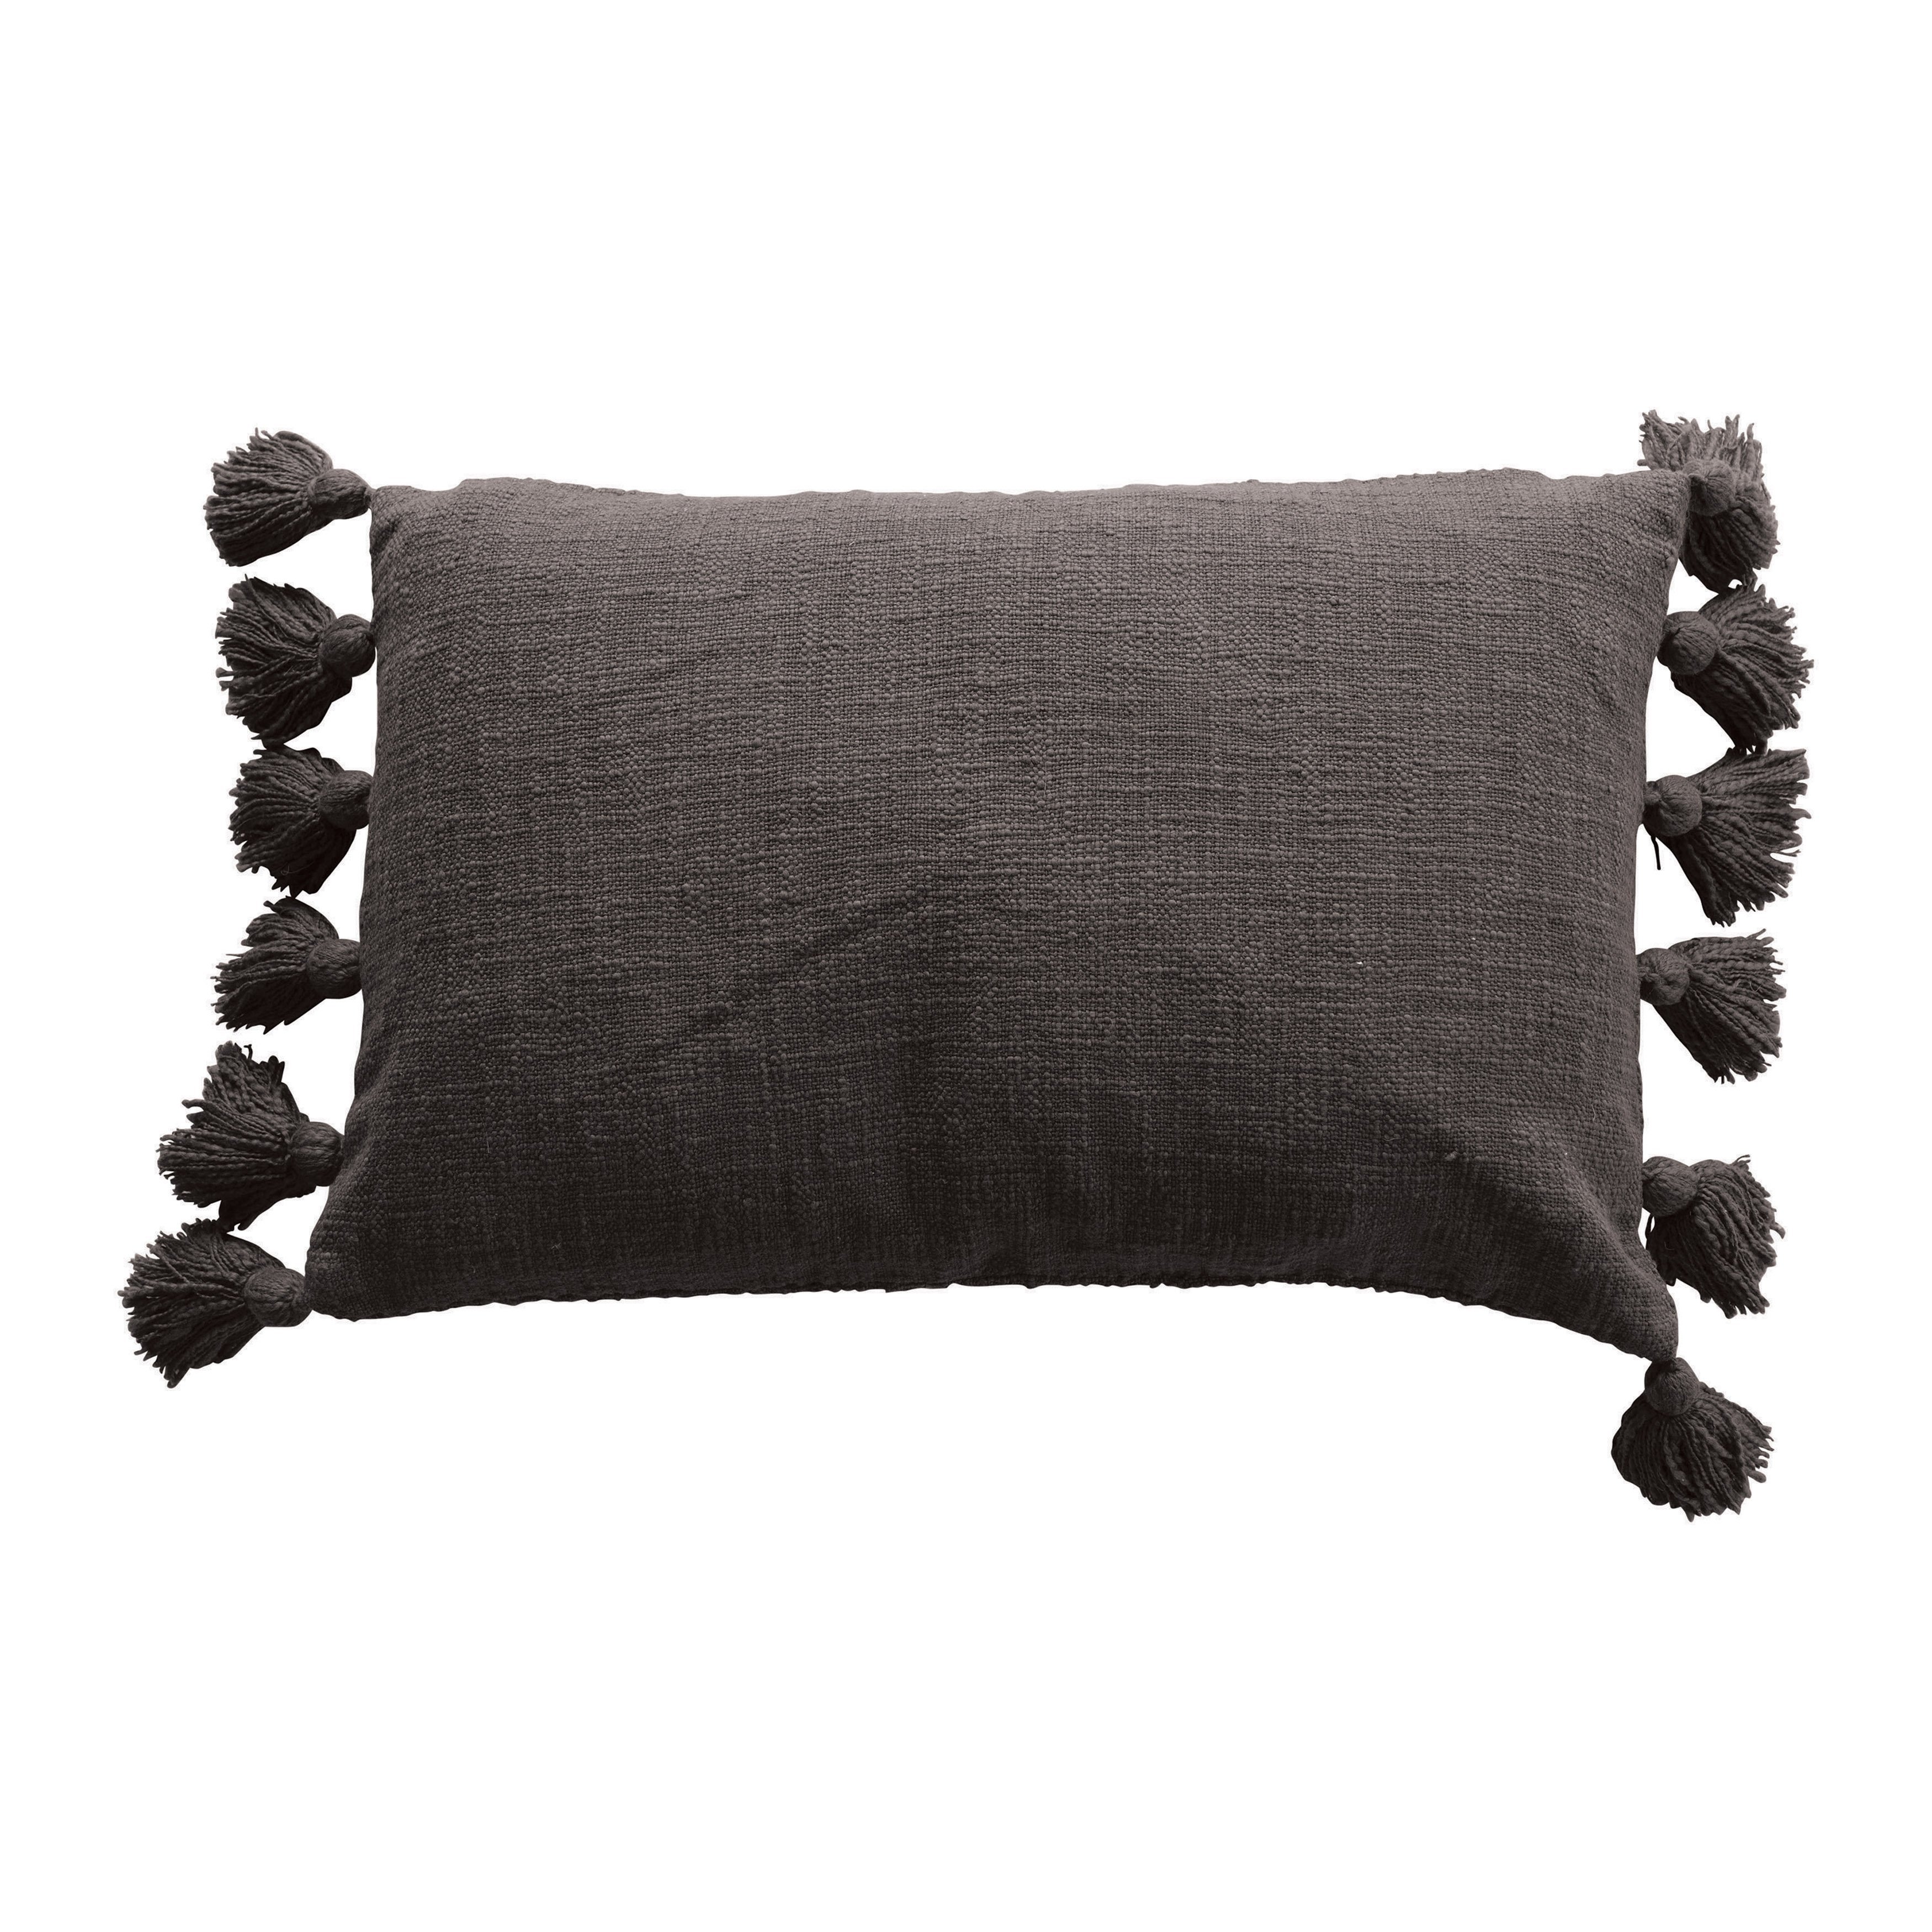 Cotton Slub Lumbar Pillow with Tassels, Iron Color - Image 0